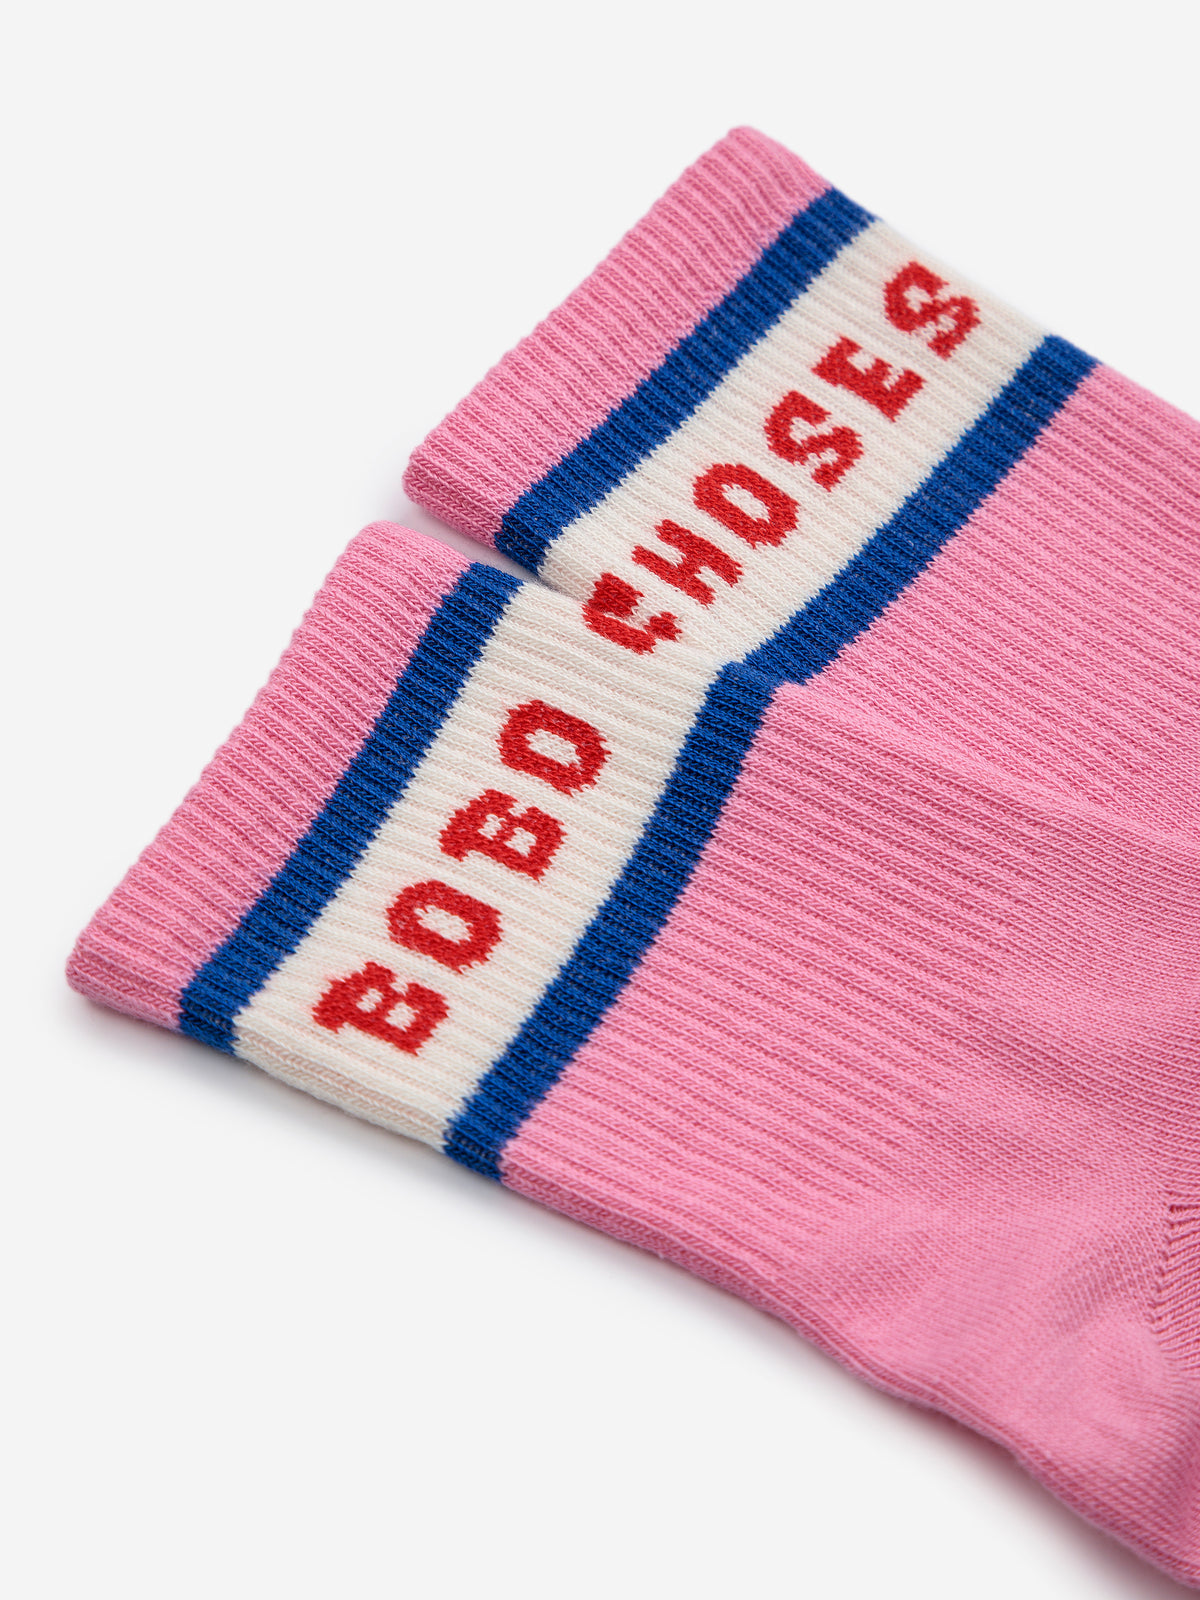 Bobo Choses short socks pink, Bobo Choses